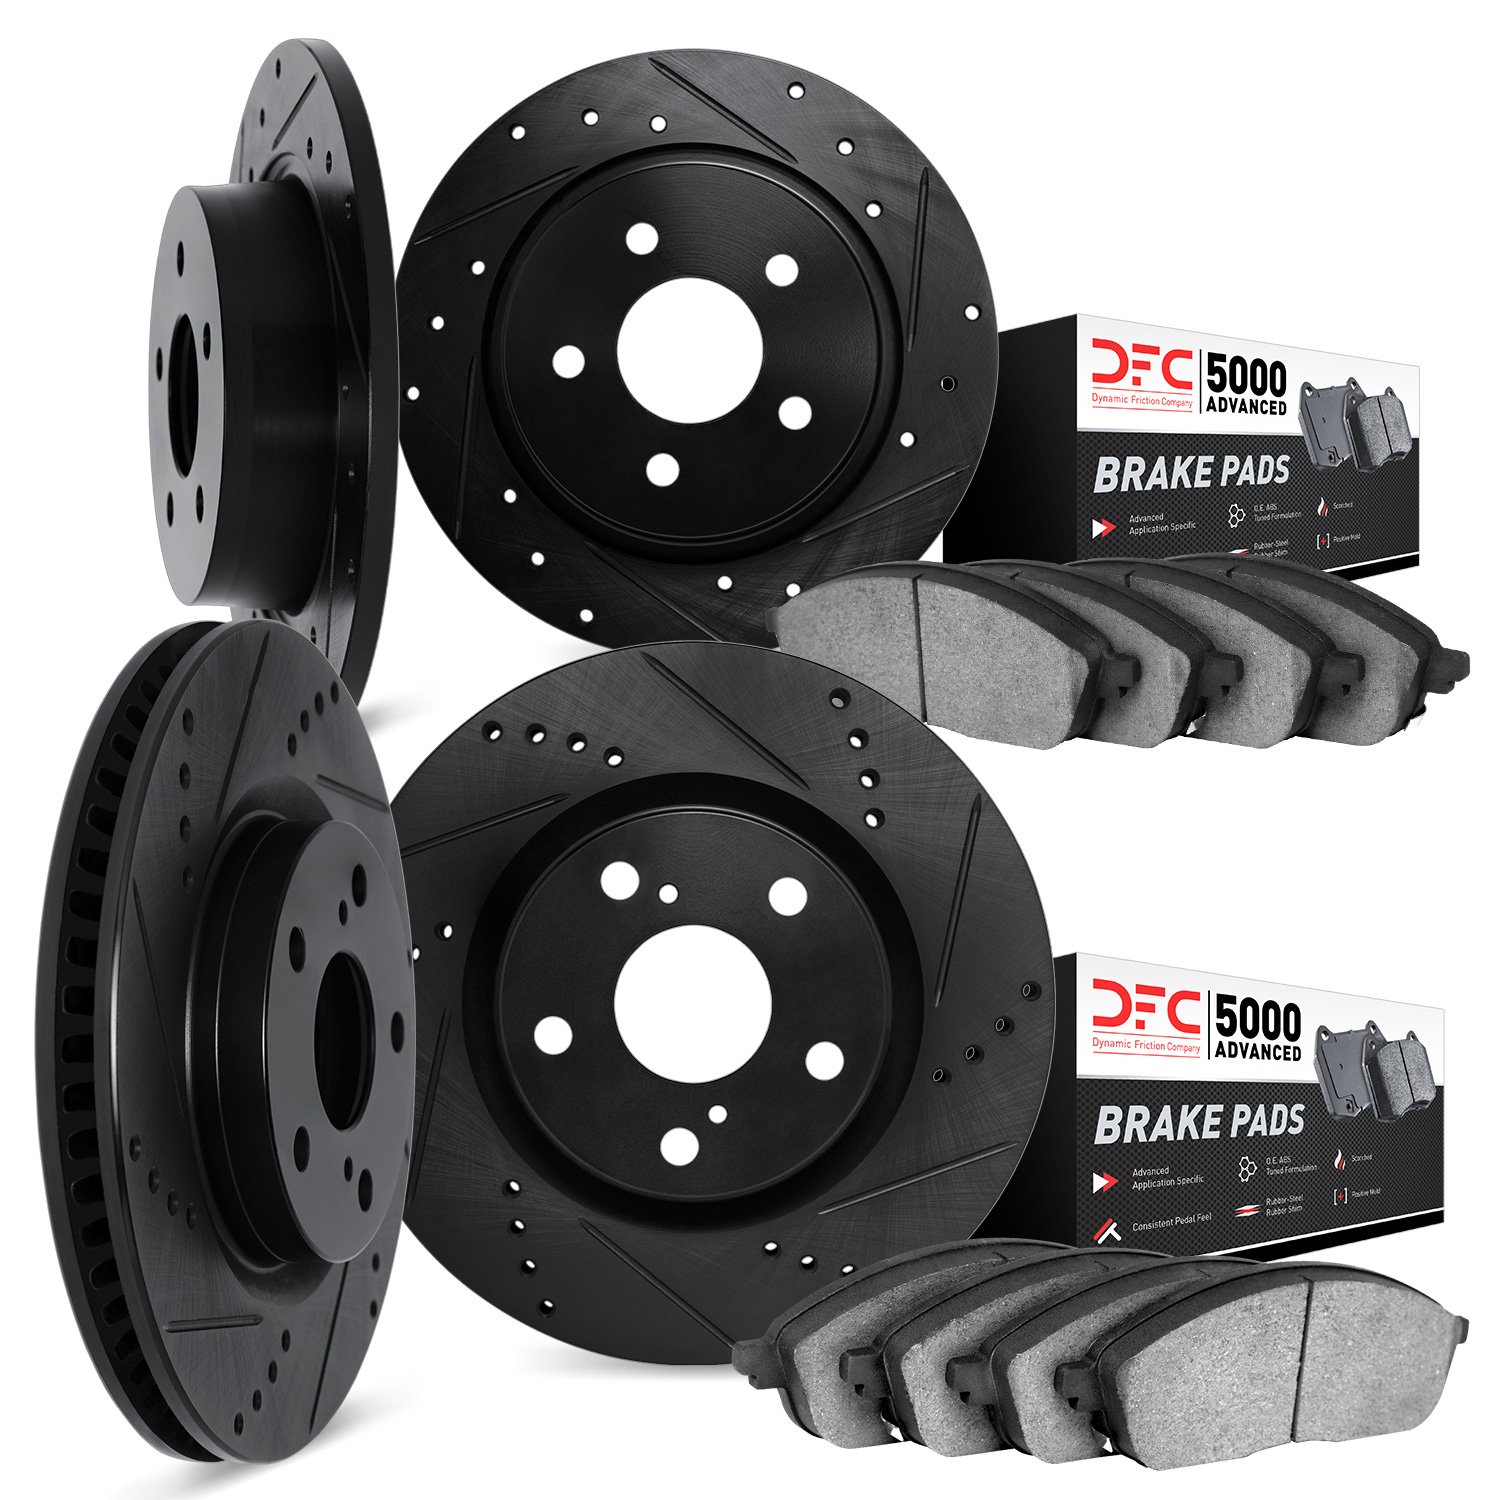 8504-54307 Drilled/Slotted Brake Rotors w/5000 Advanced Brake Pads Kit [Black], 2015-2020 Ford/Lincoln/Mercury/Mazda, Position: